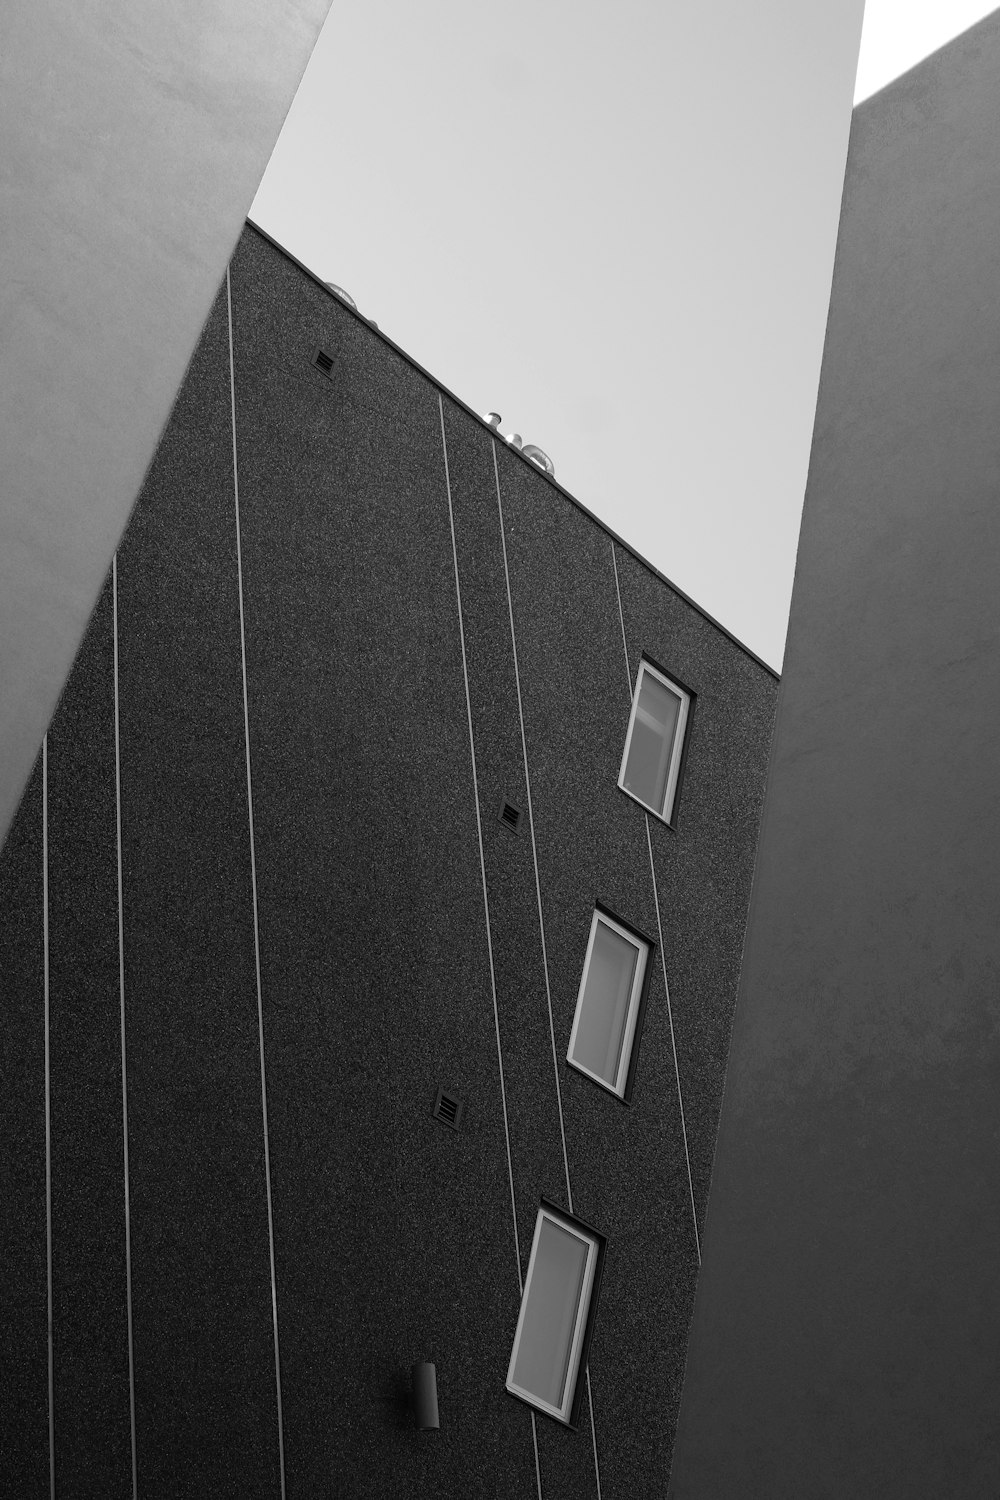 black concrete building during daytime